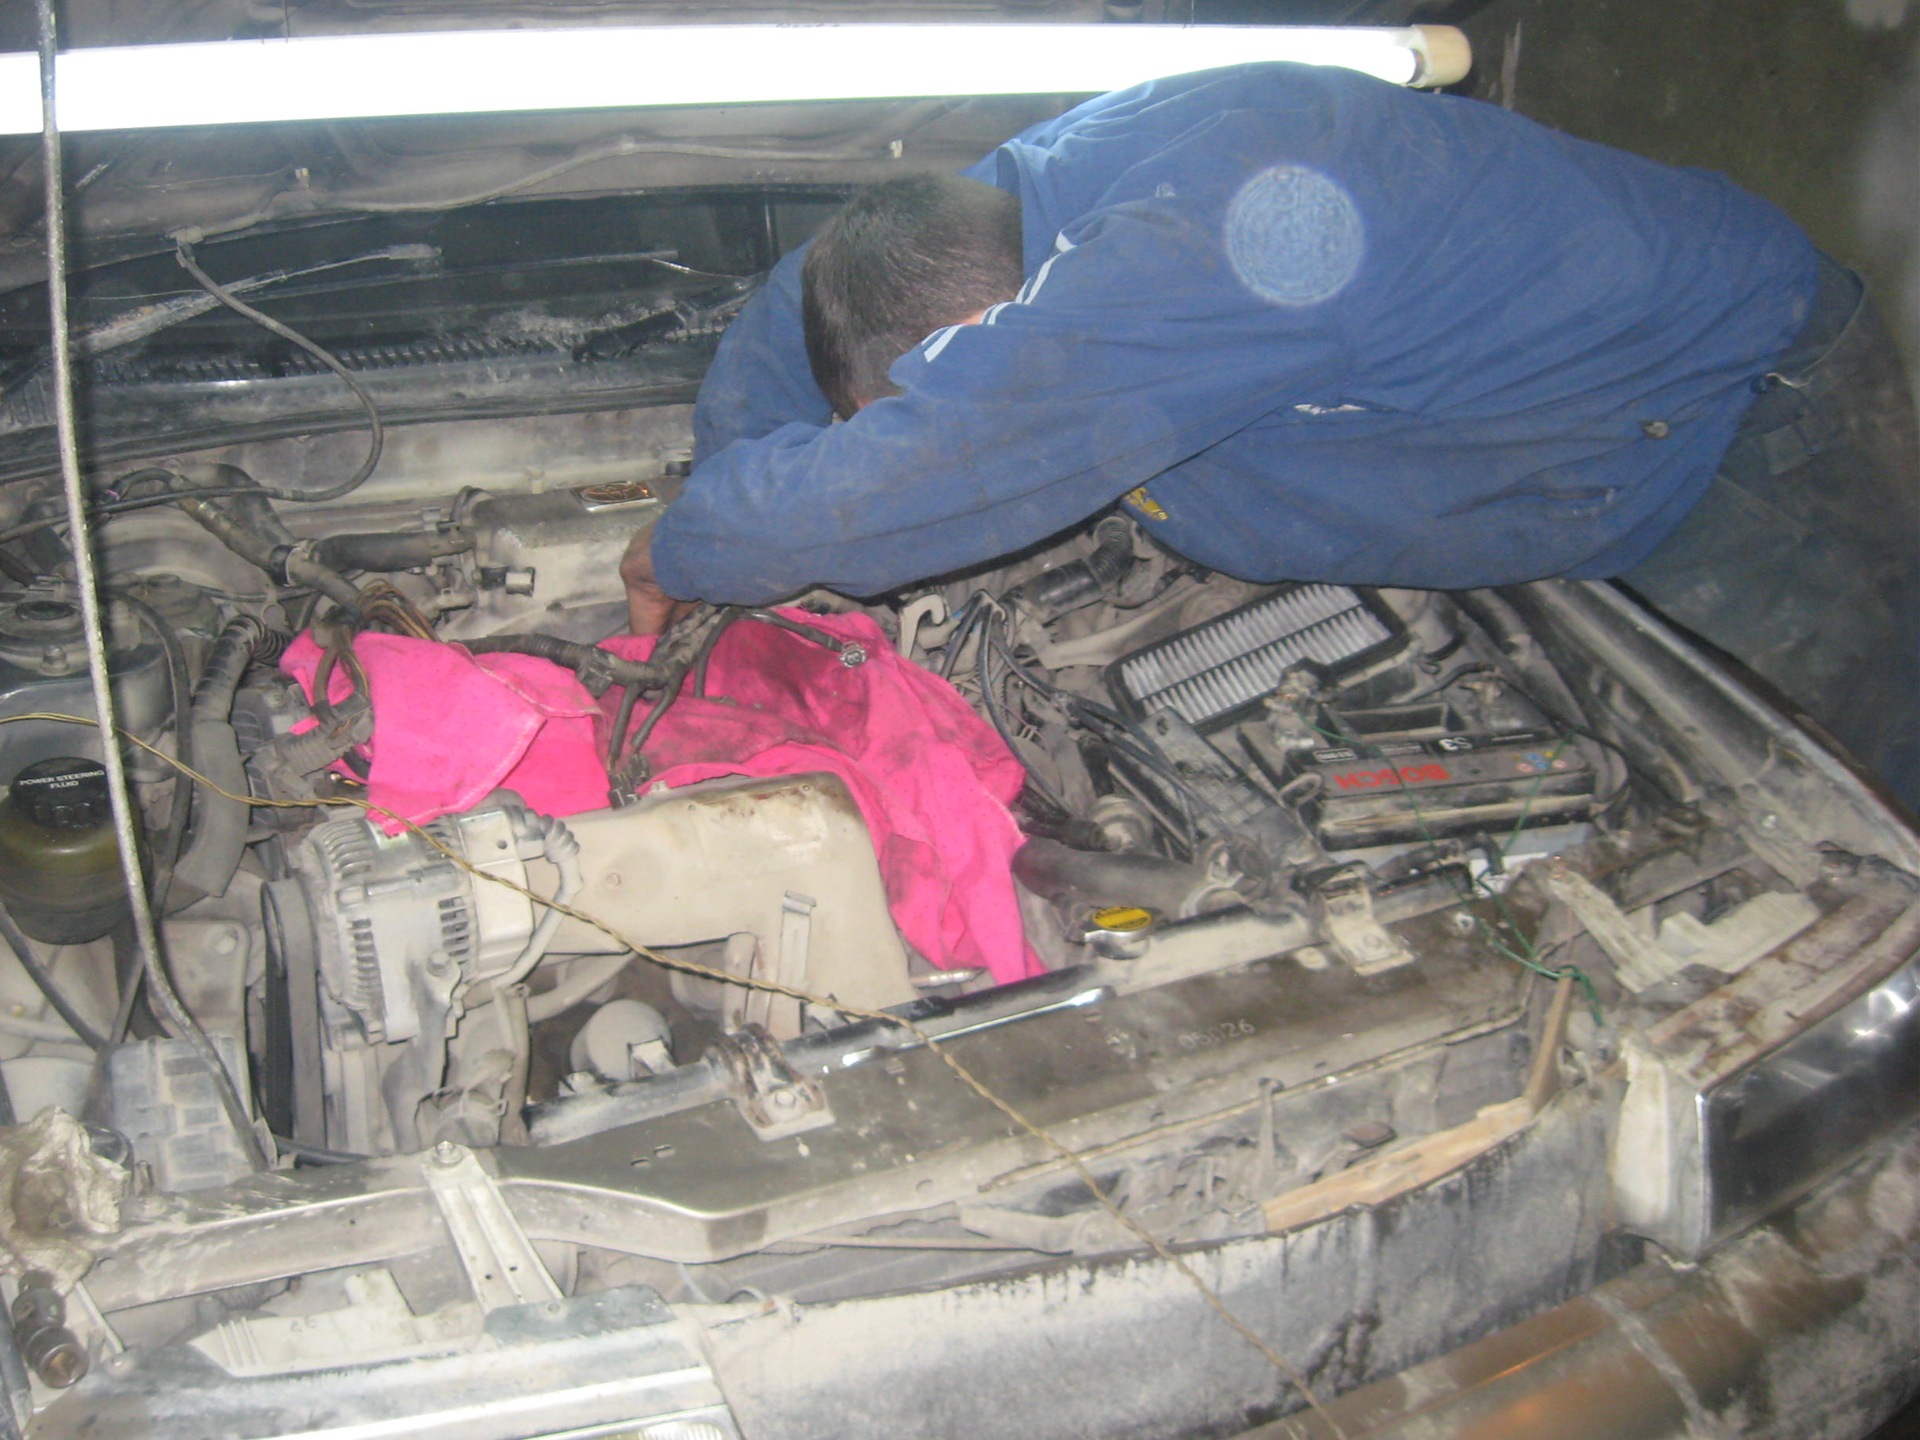 various repairs - Toyota Carina ED 20 L 1989